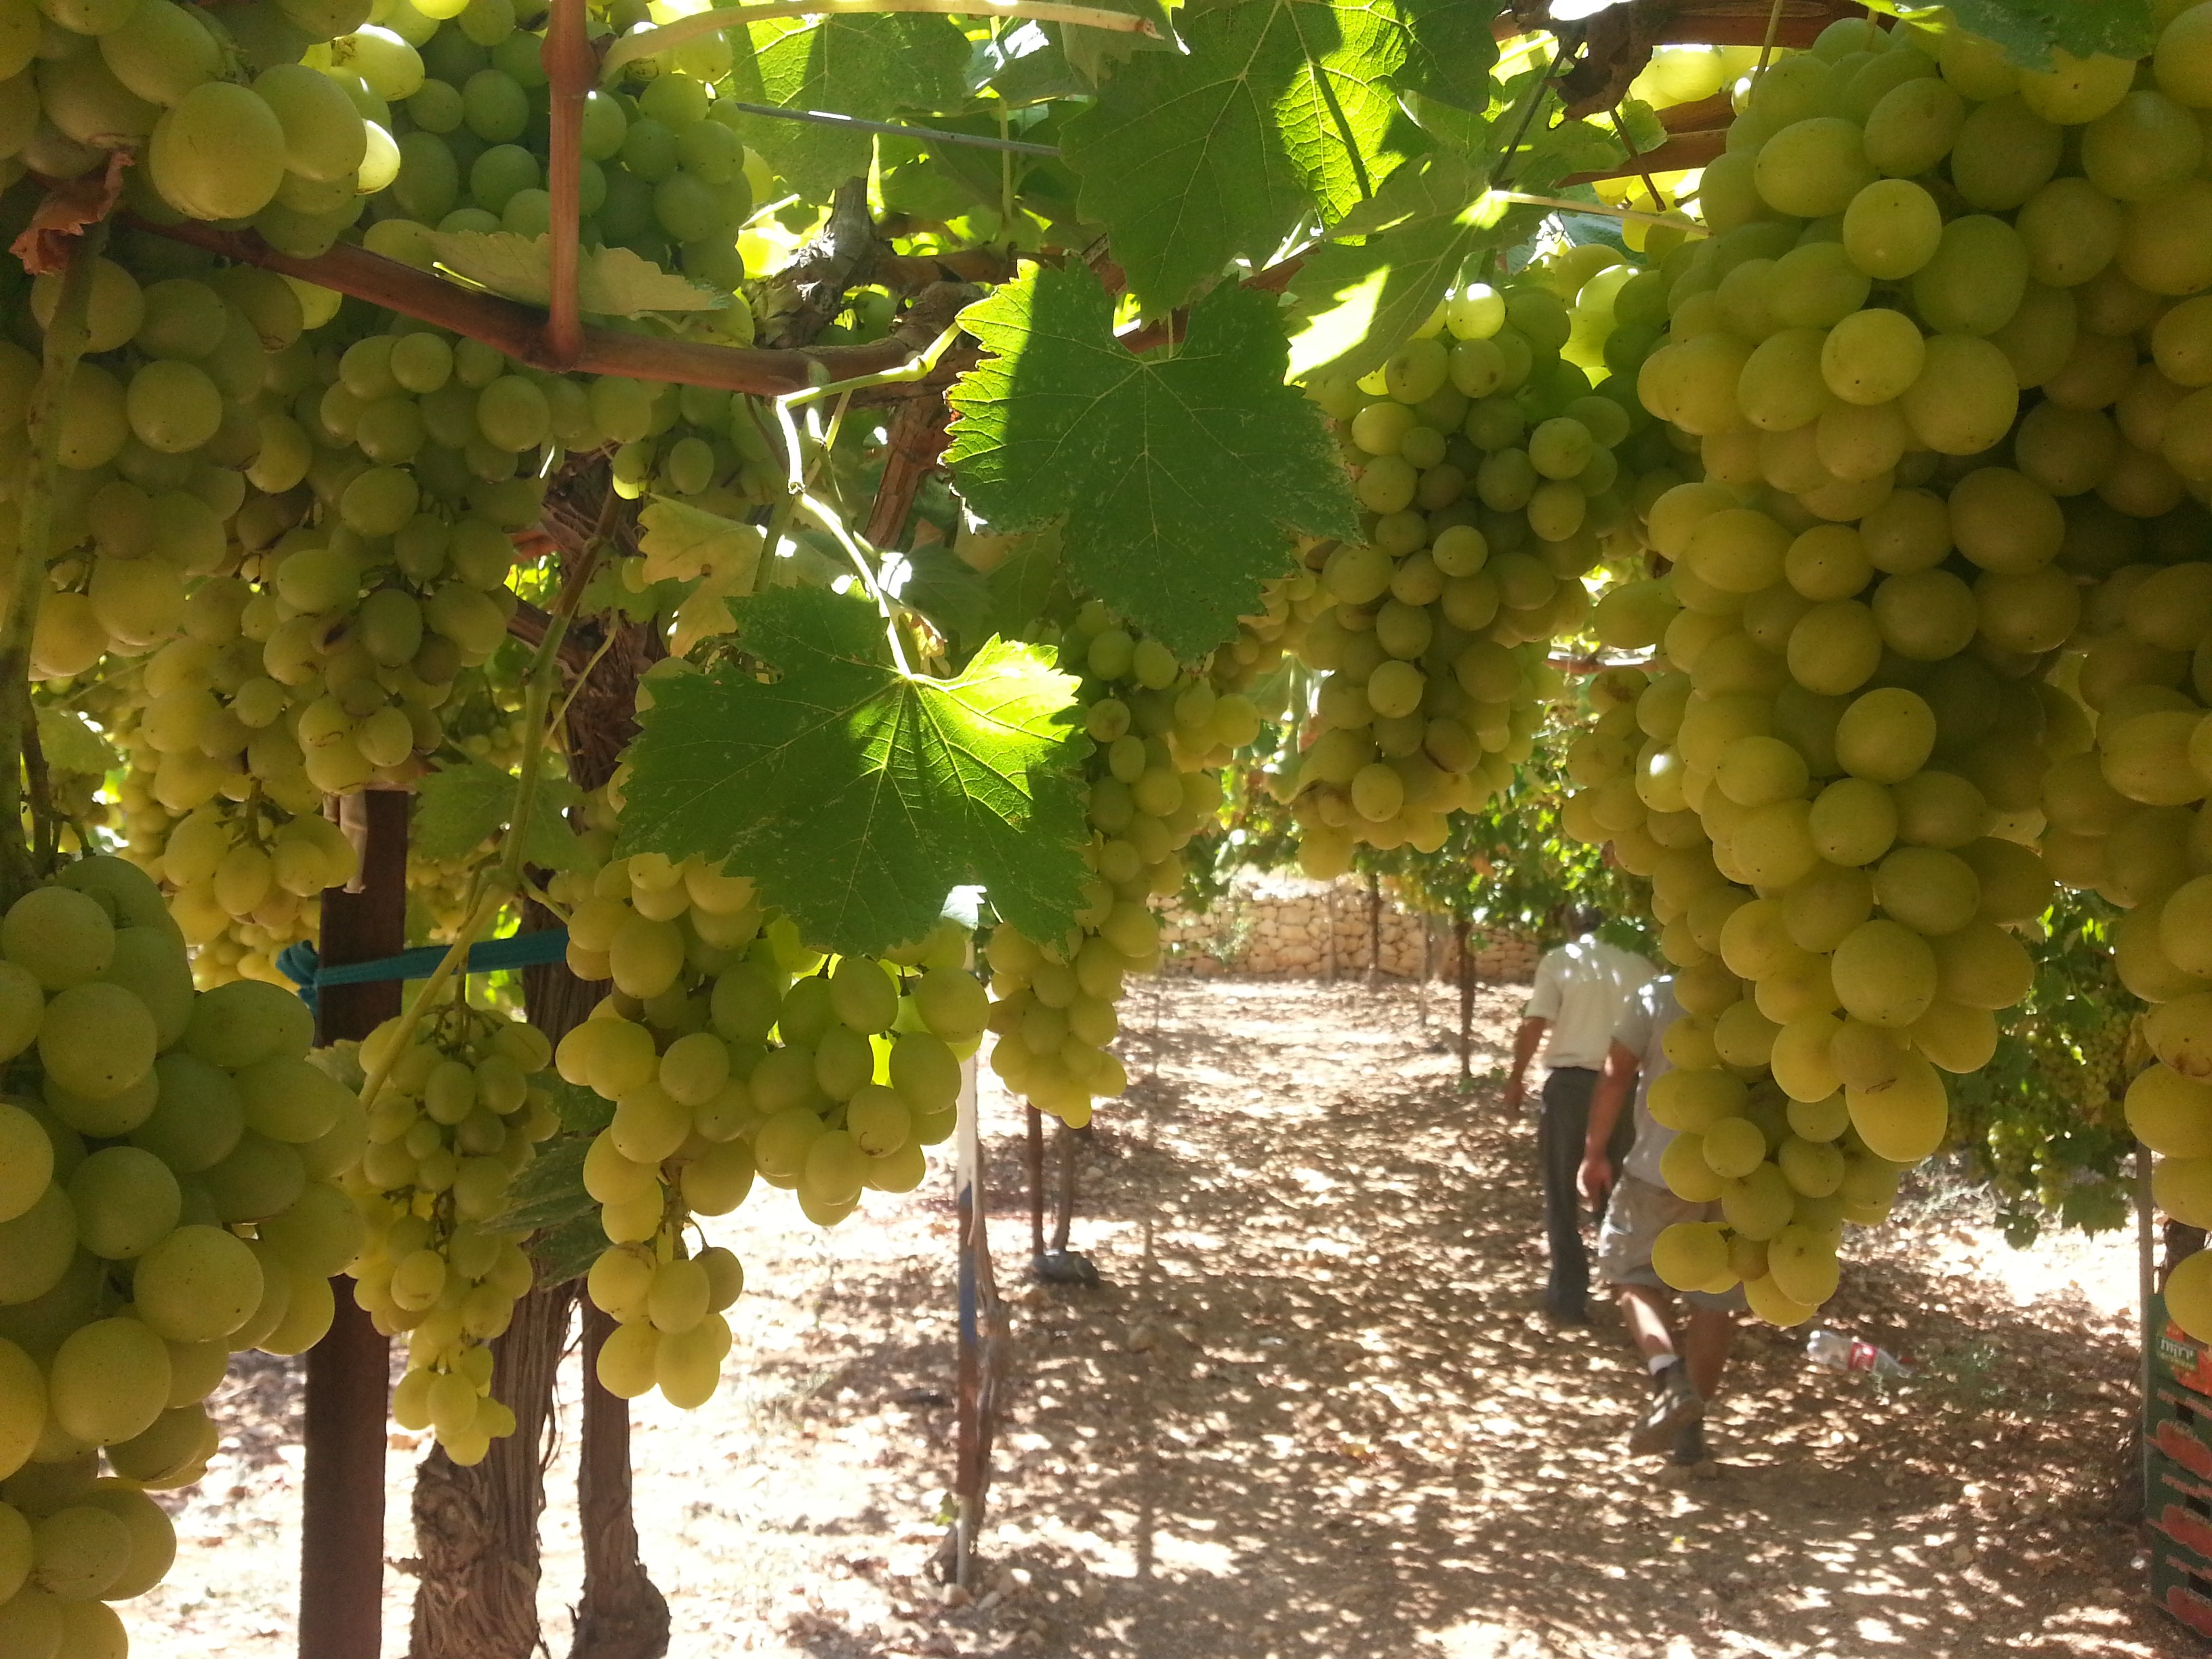 Interview With Gil Shatsberg of Israel's Recanati Winery